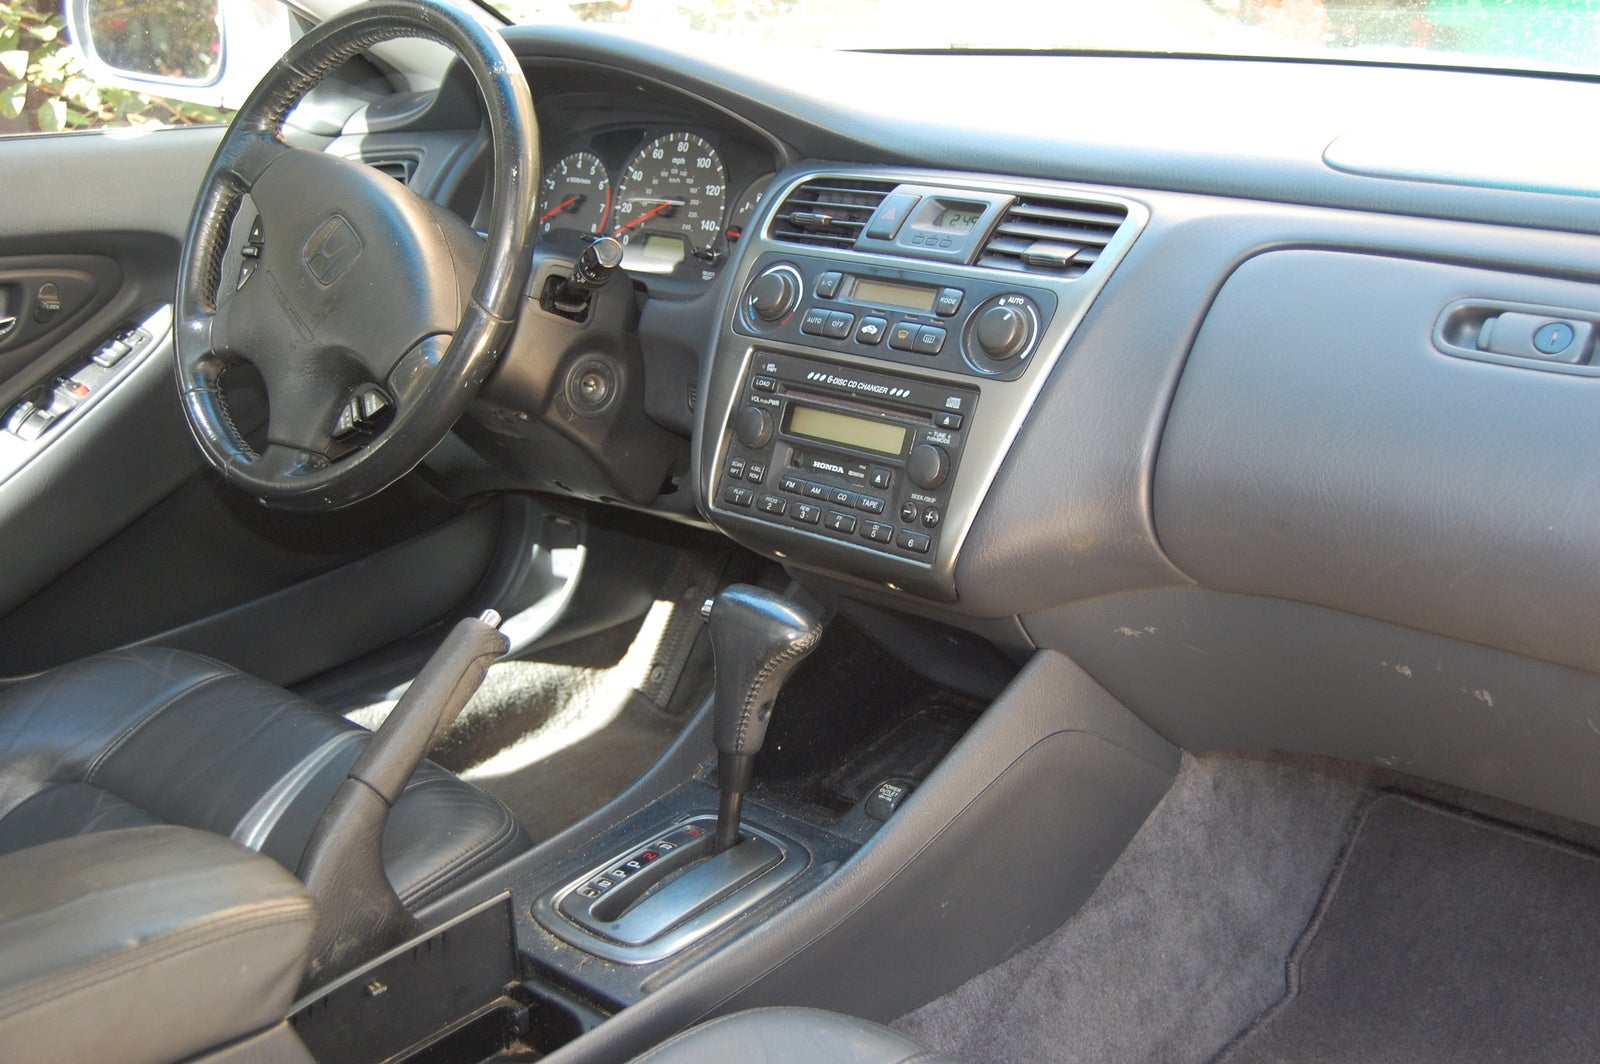 2017 Honda Accord Interior And Exterior Color Options